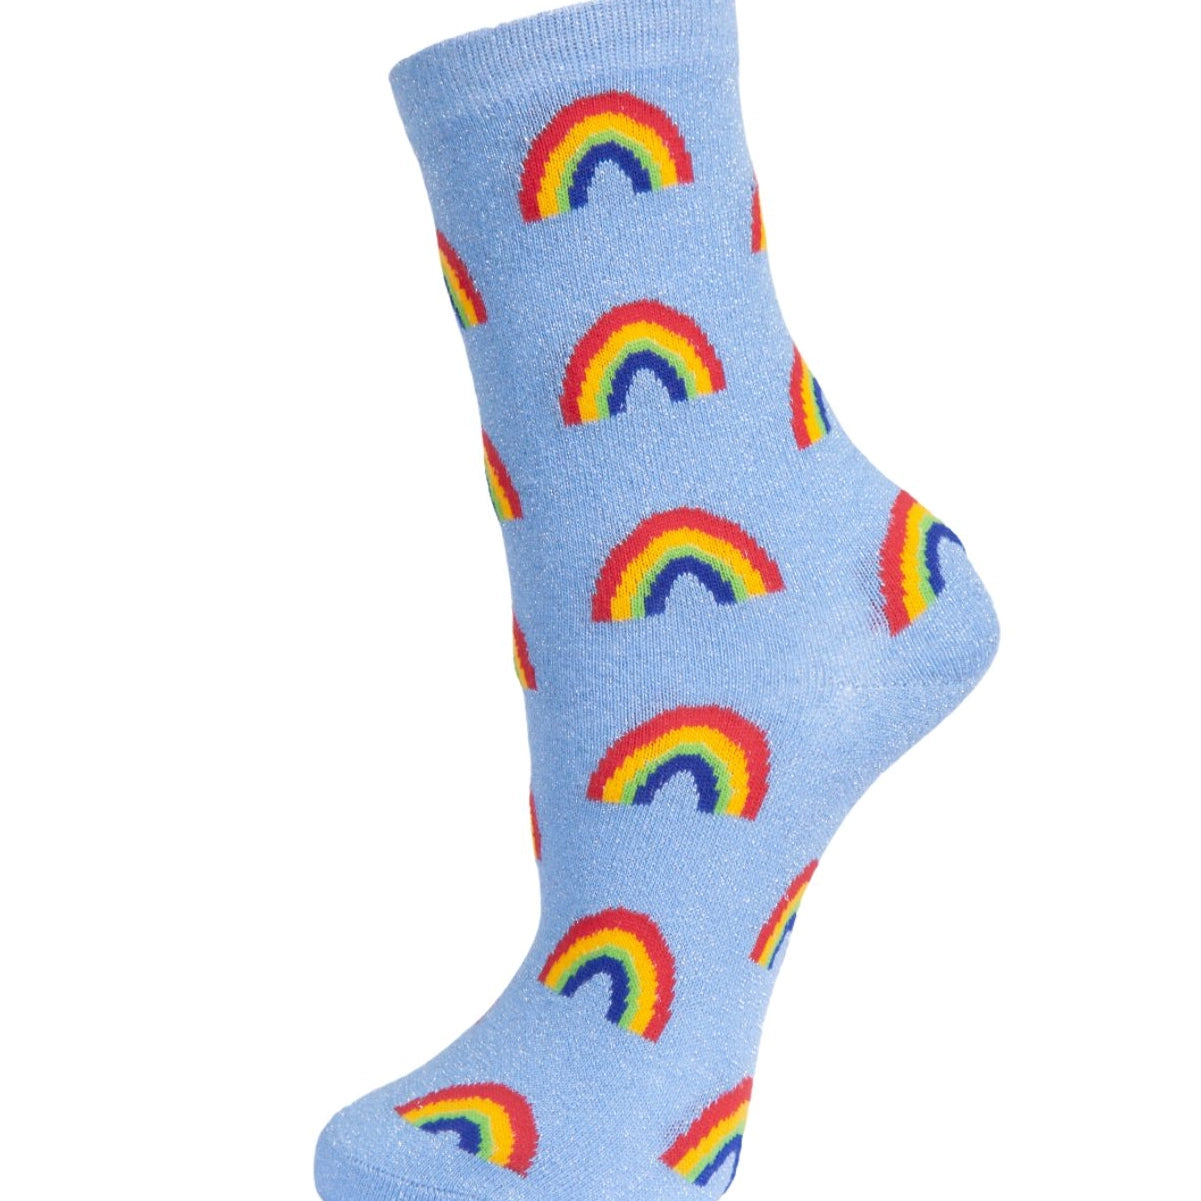 a pair of glittery blue ankle socks with a rainbow design